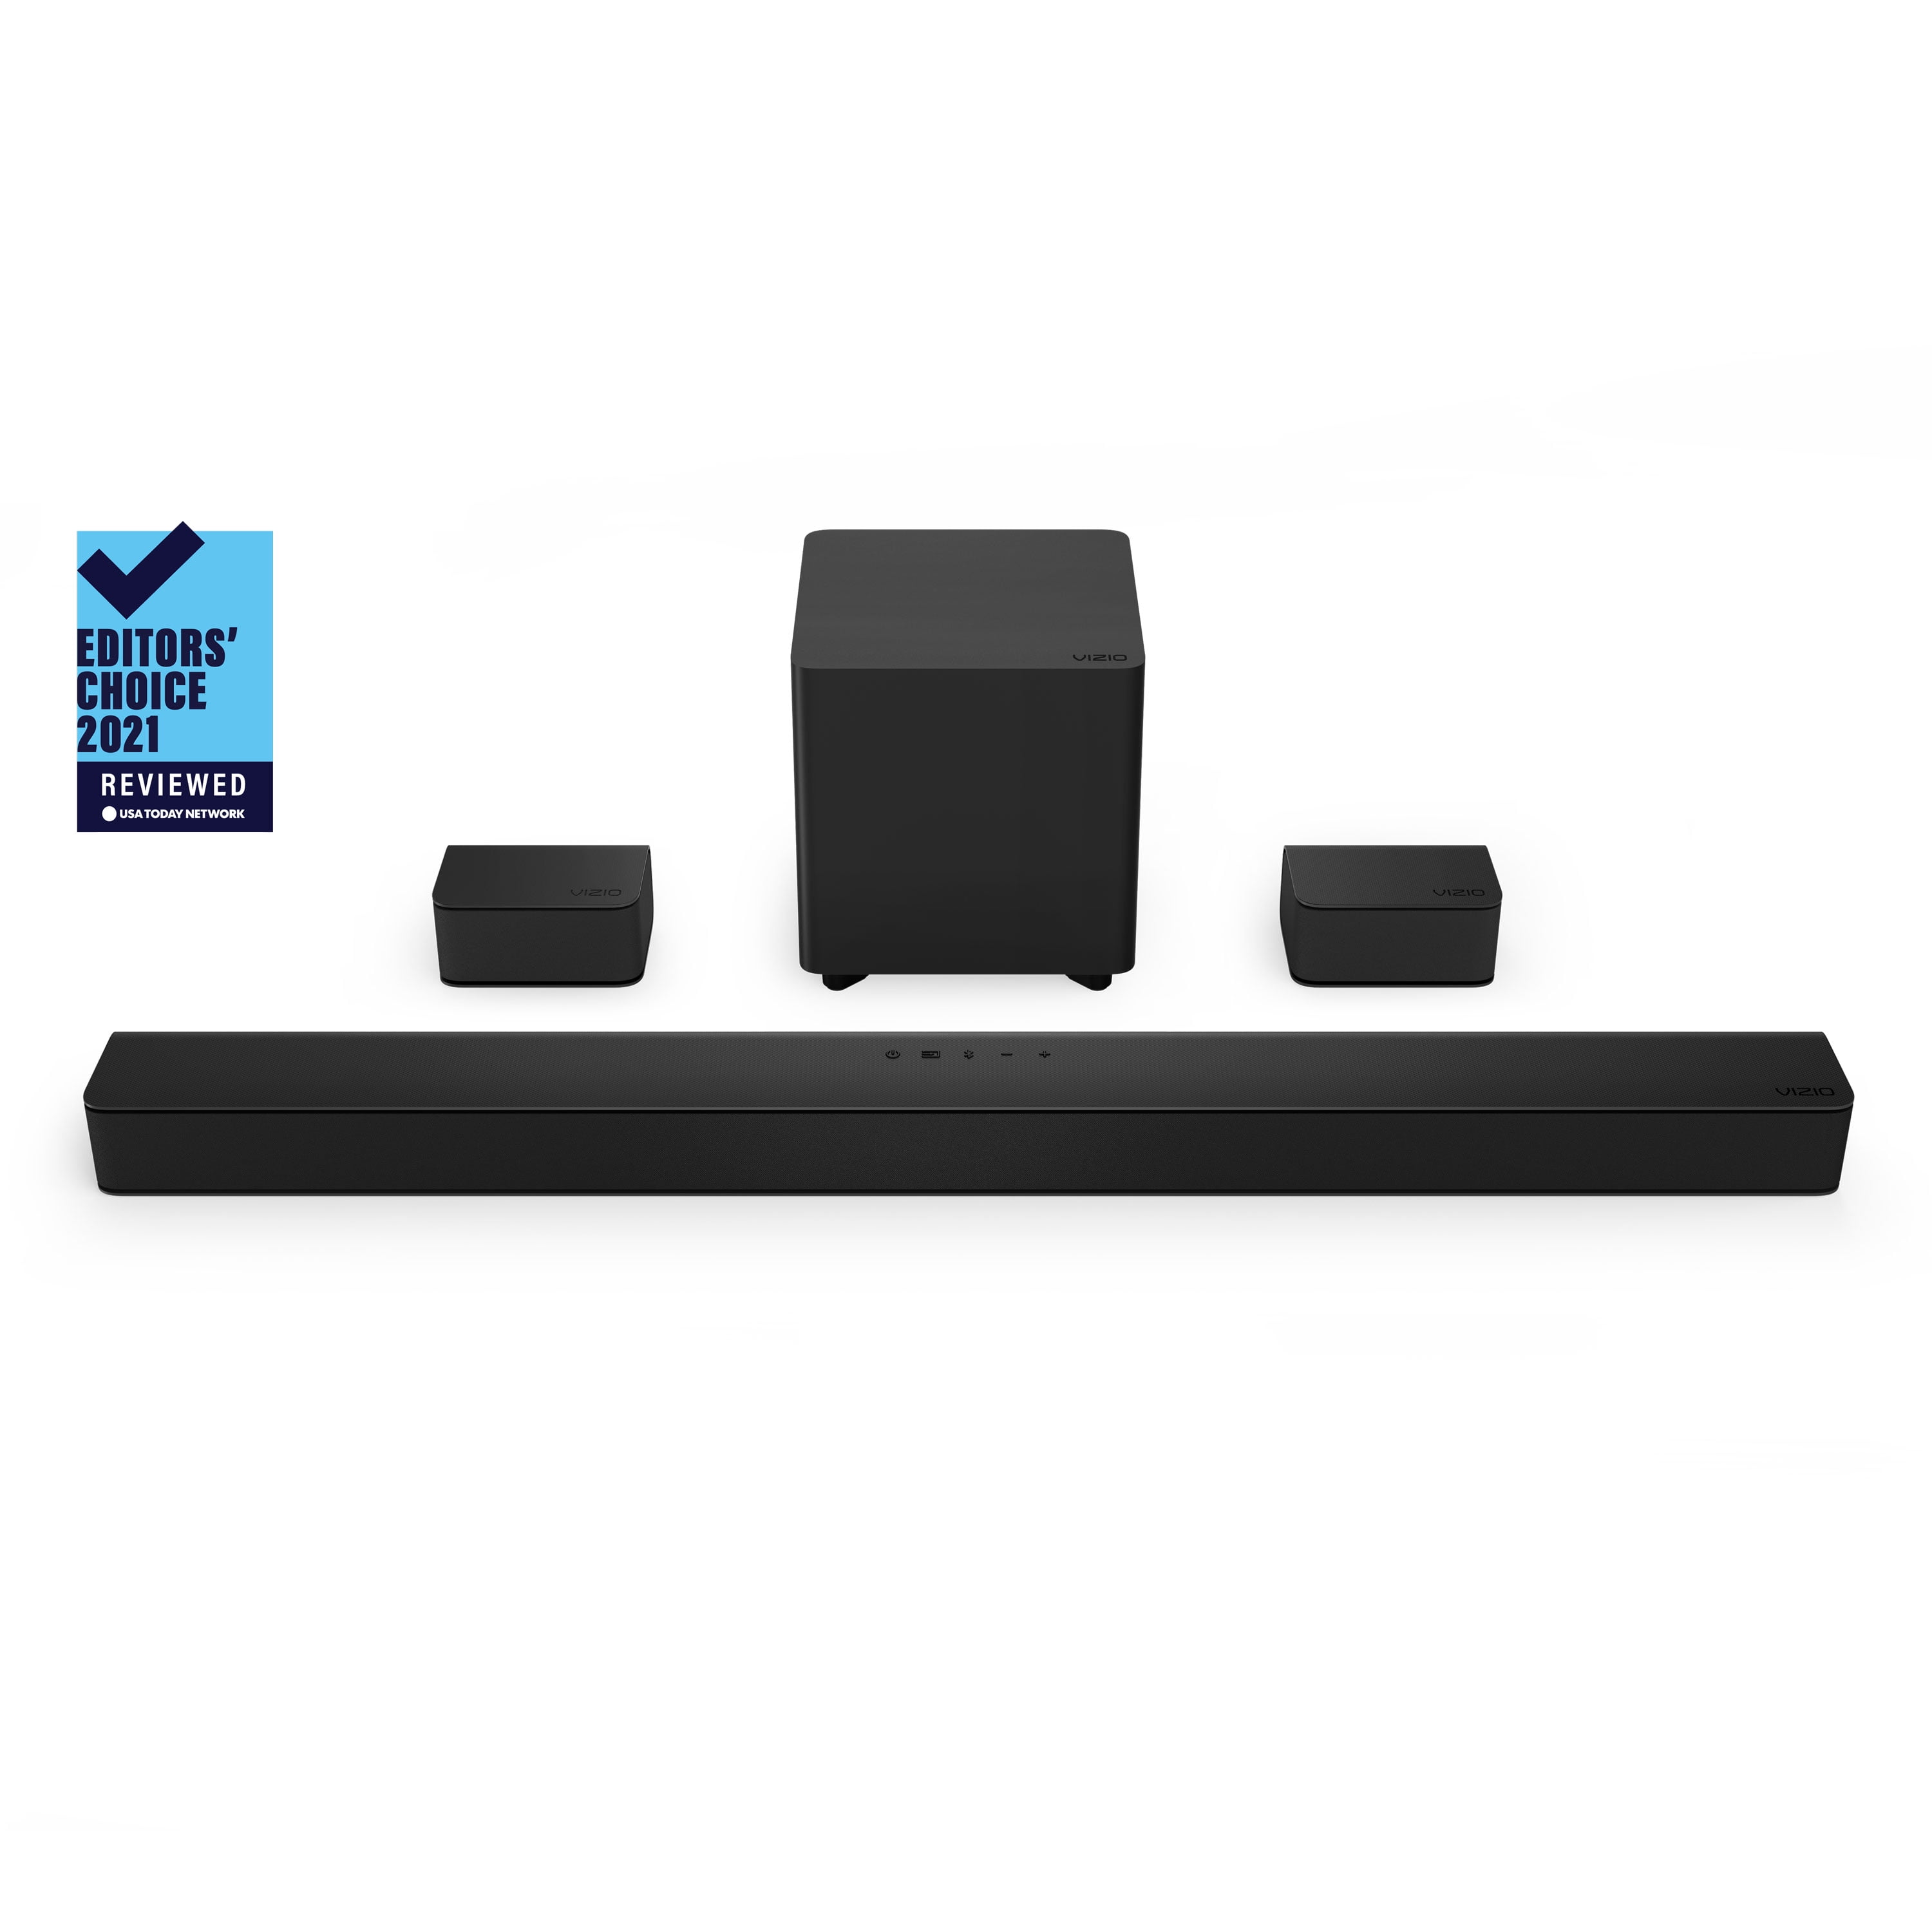 VIZIO V51x-J6 V-Series 5.1 Home Theater Sound Bar with DTS Virtual:X, Bluetooth